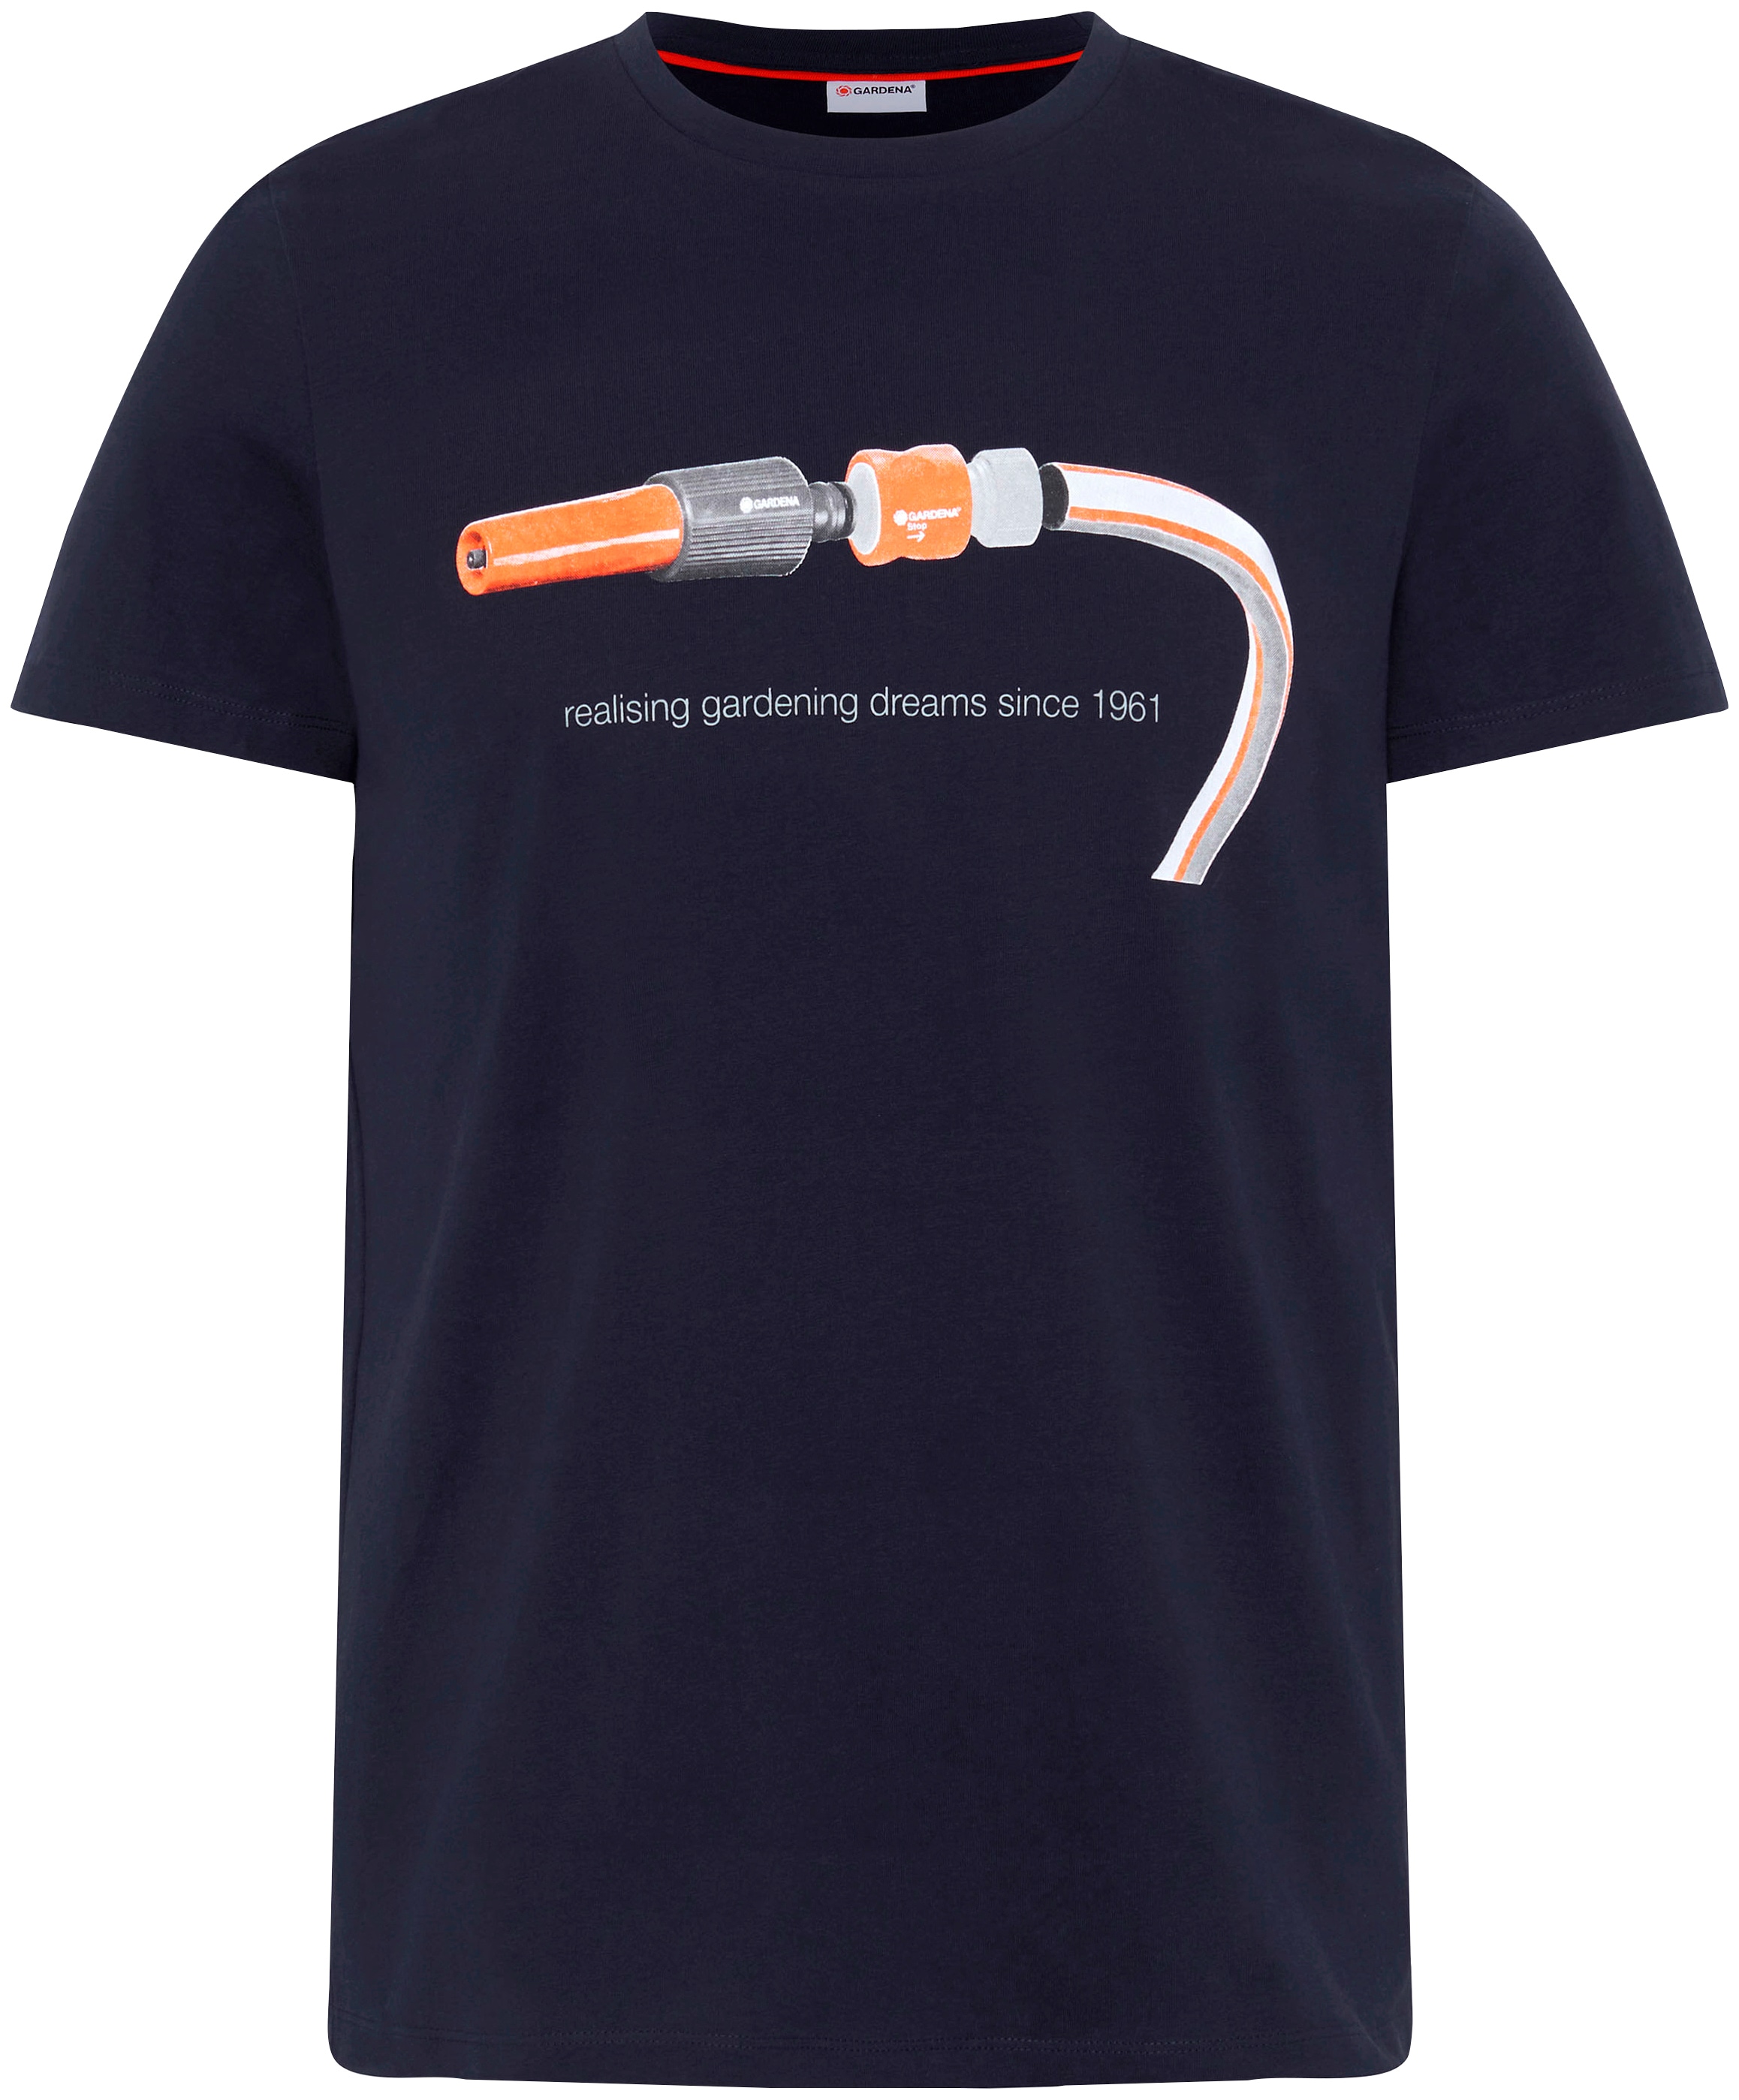 GARDENA T-Shirt »Night Sky«, mit Gardena-Logodruck